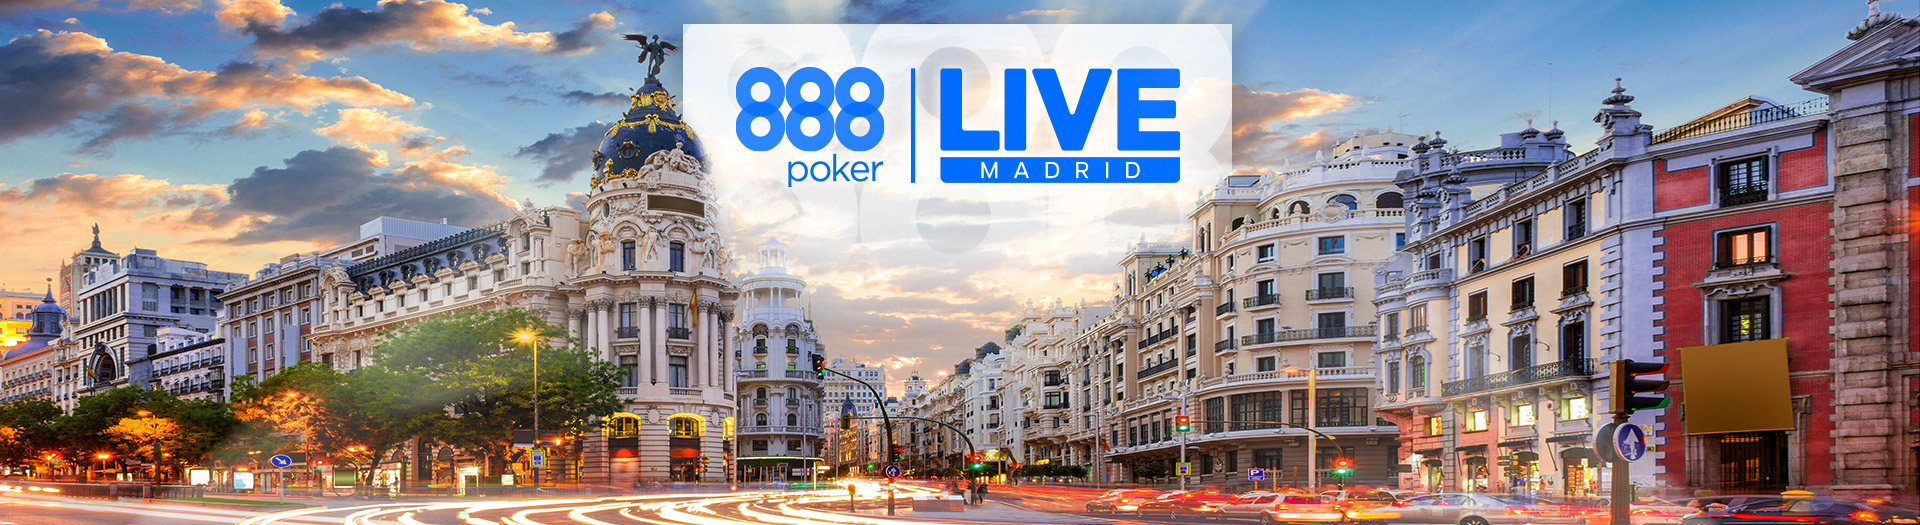 TS-39001-Live-Madrid-main-image_LP-1669193343663_tcm1488-572784